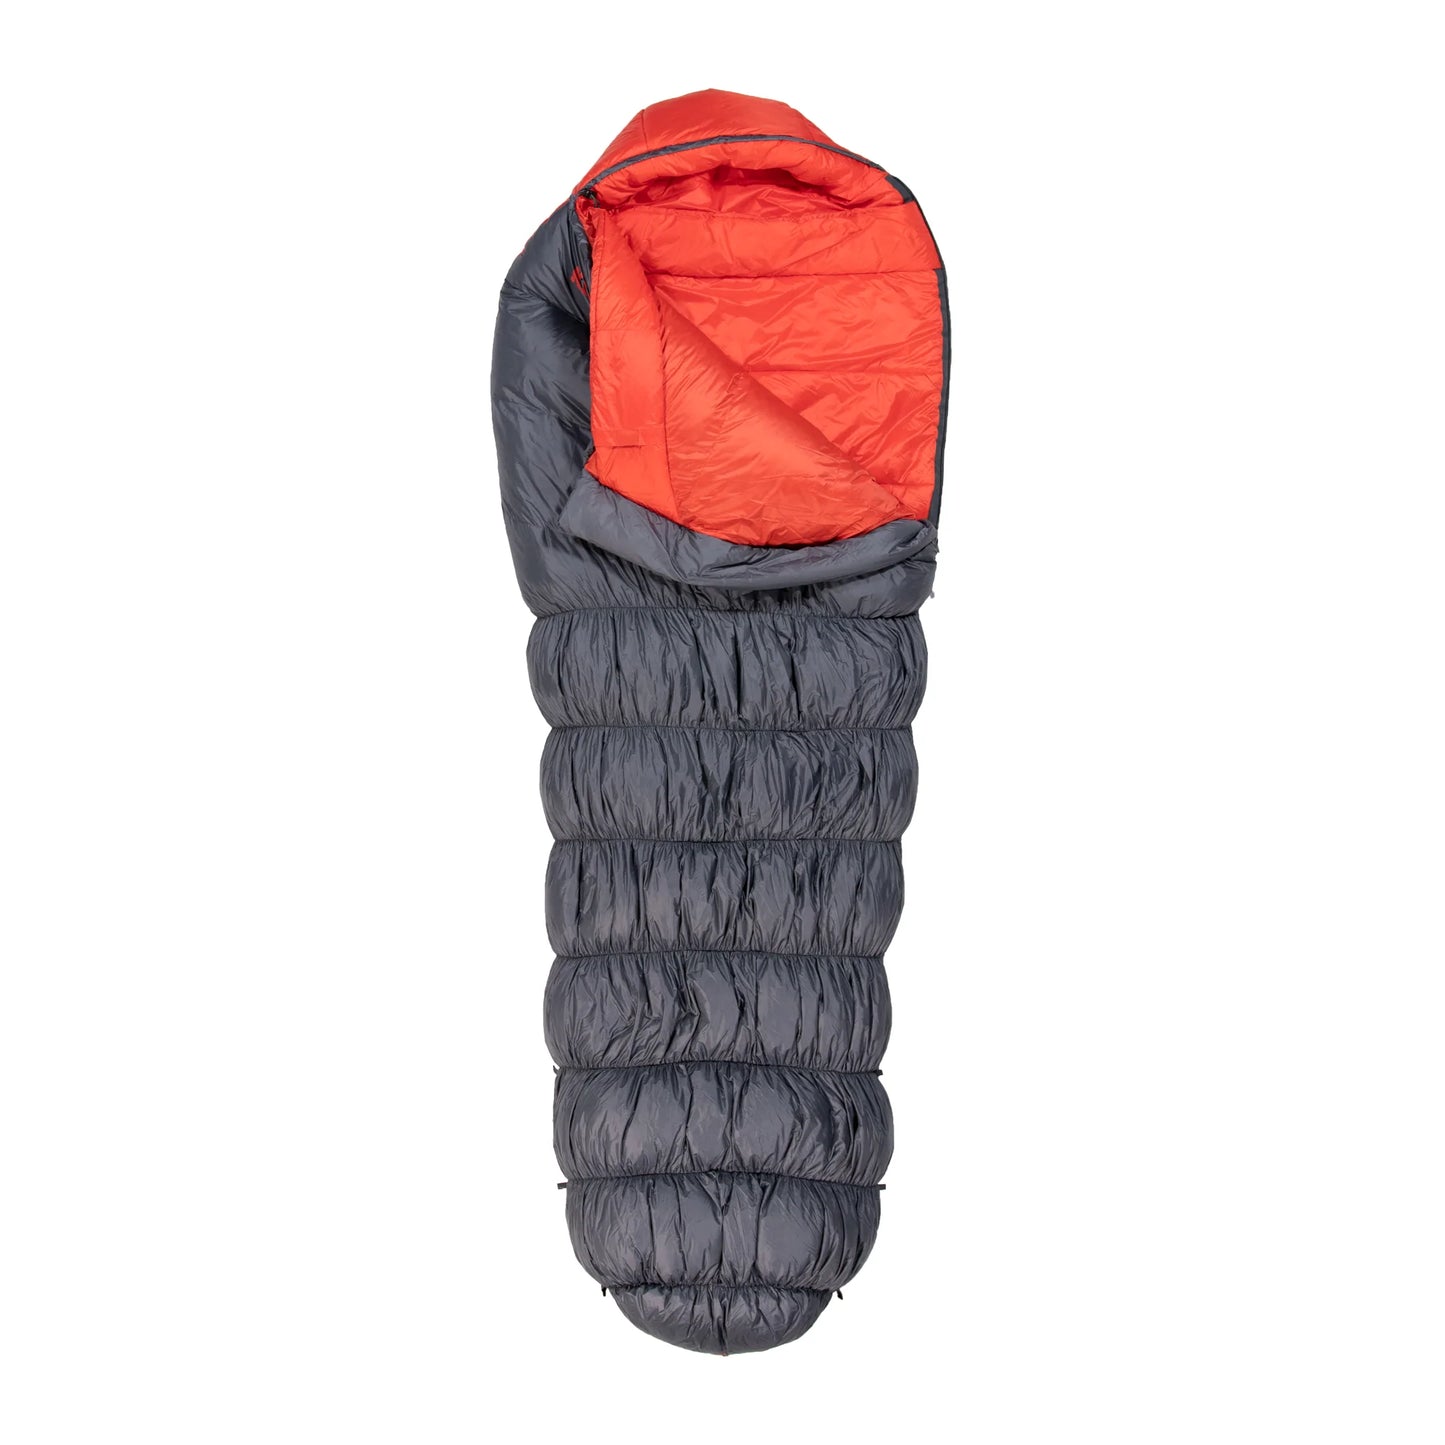 Klymit - KSB 0 Insulated Sleeping bag (-18C)